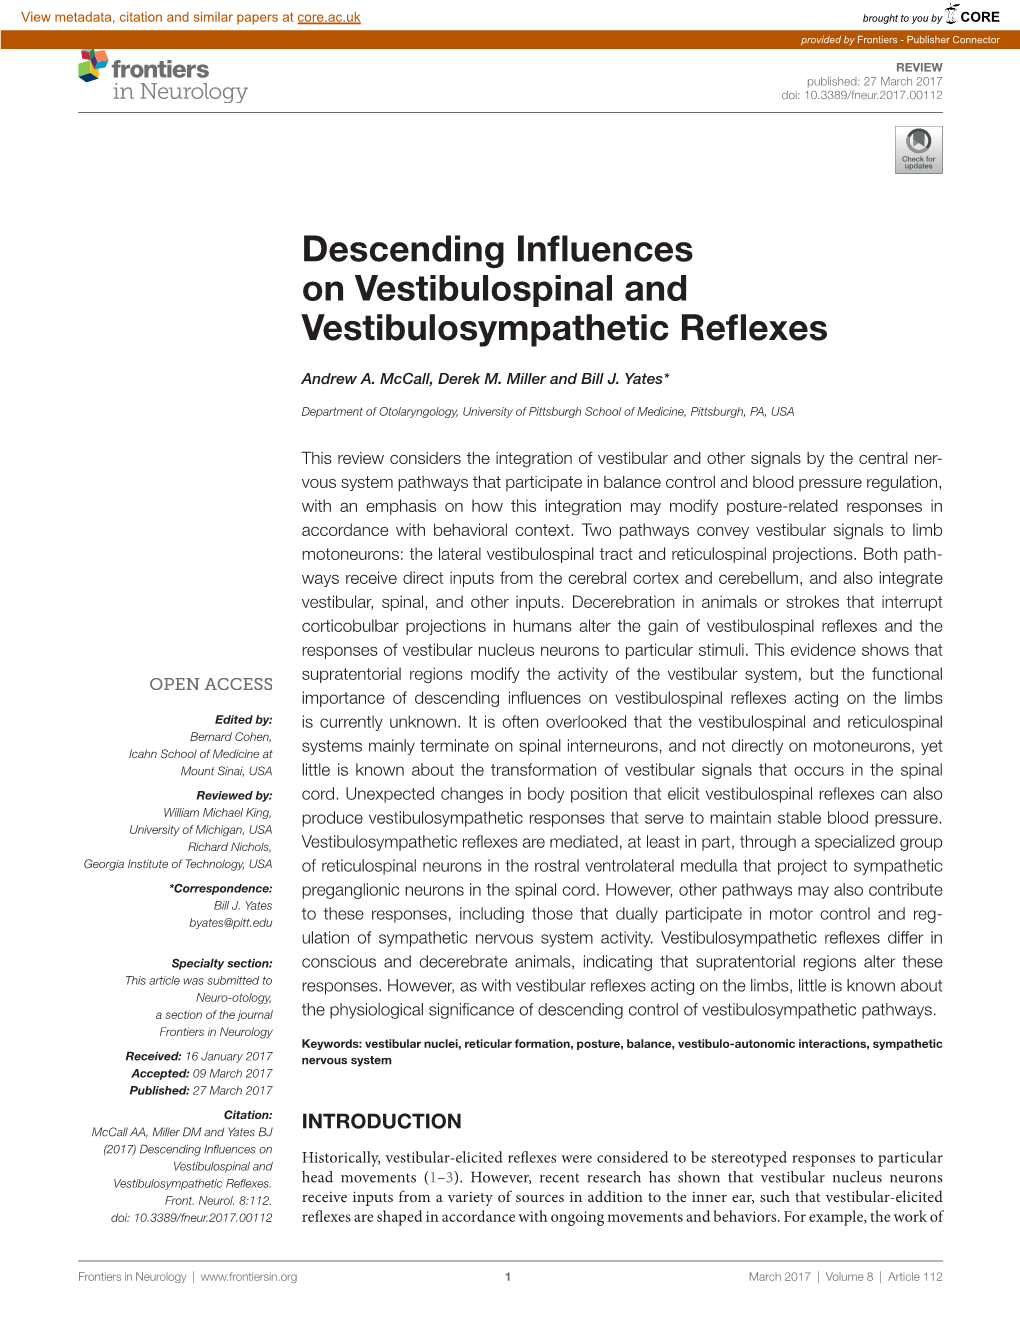 Descending Influences on Vestibulospinal and Vestibulosympathetic Reflexes